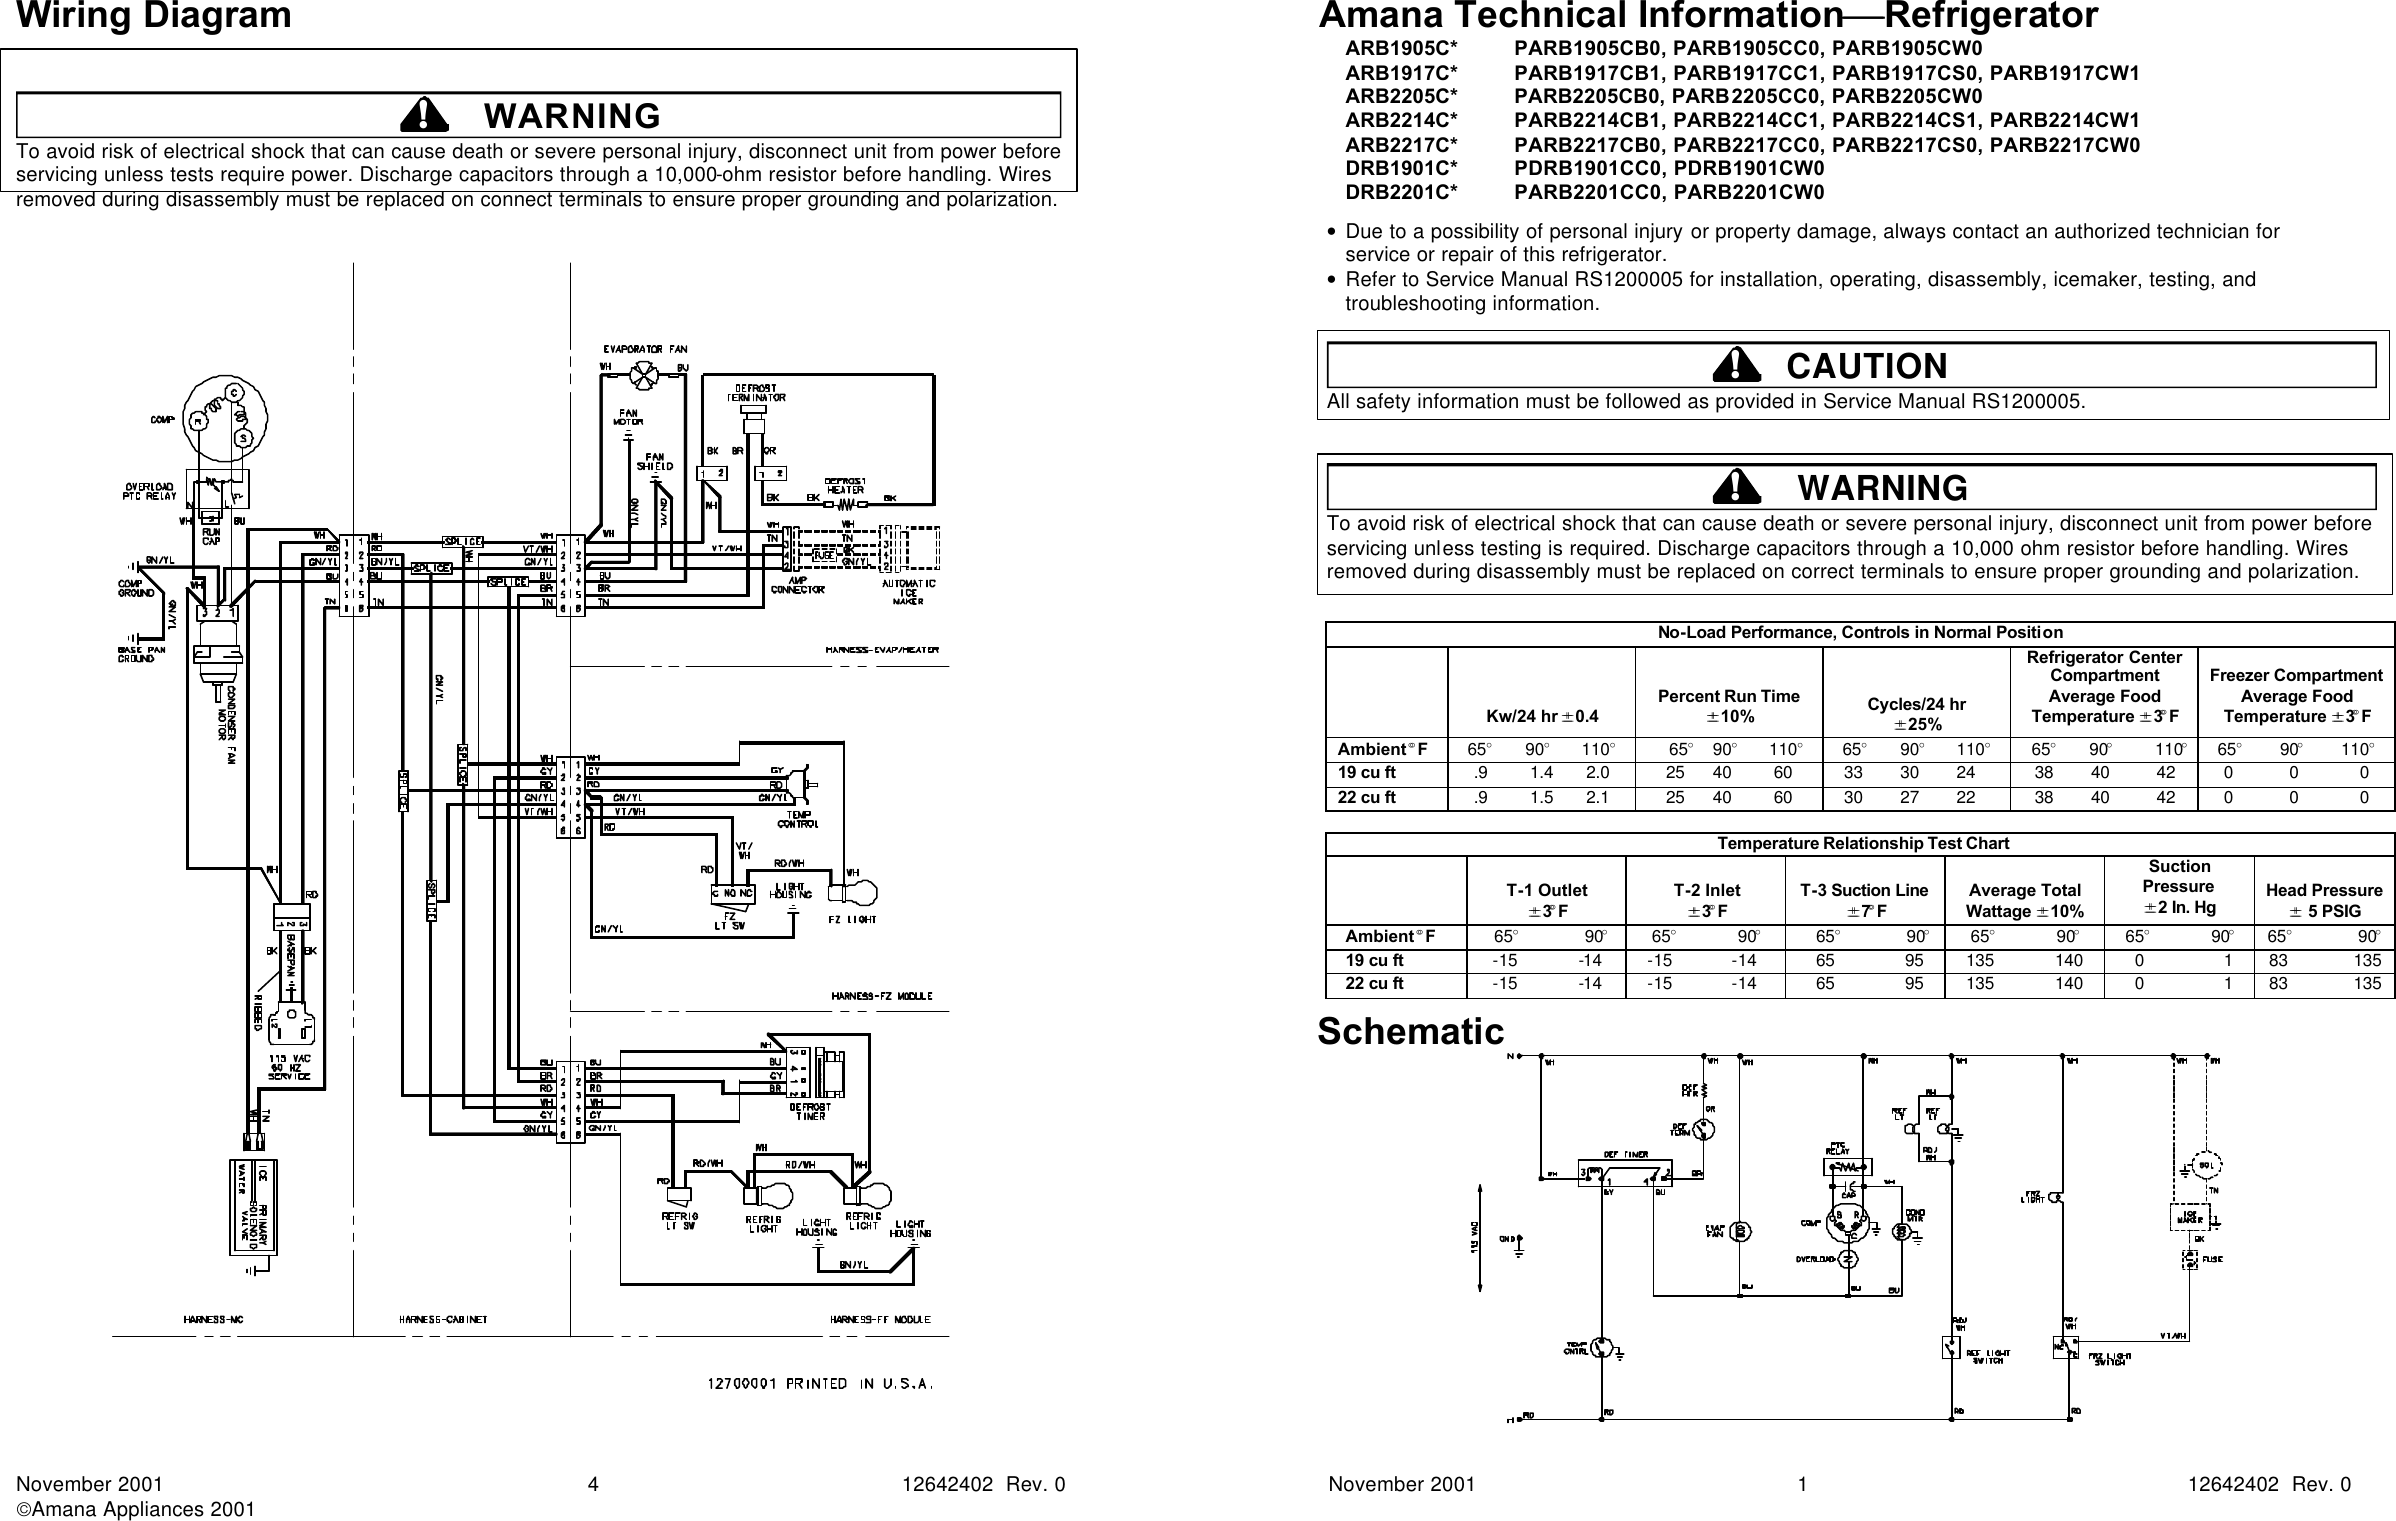 Amana Wiring Diagram Refrigerator - Wiring Diagram